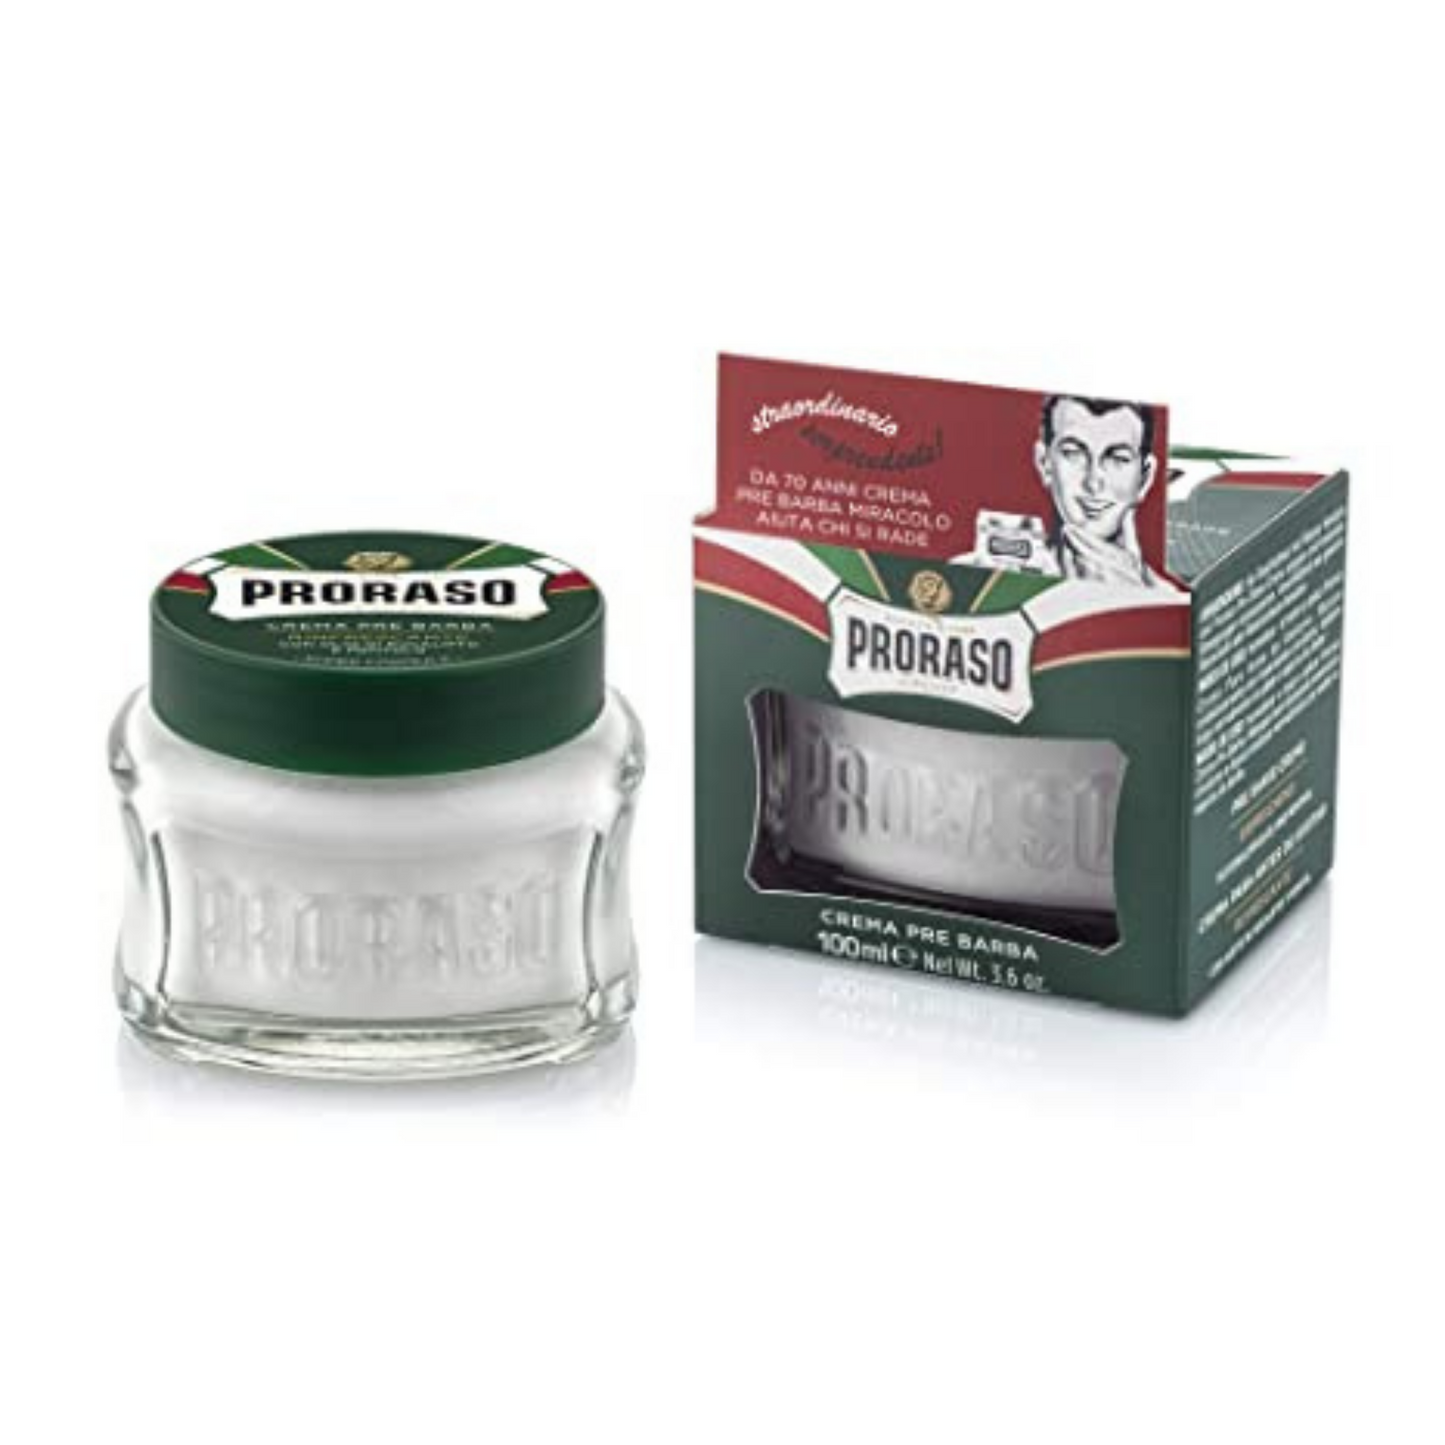 Primary image of Refresh Preshave Cream